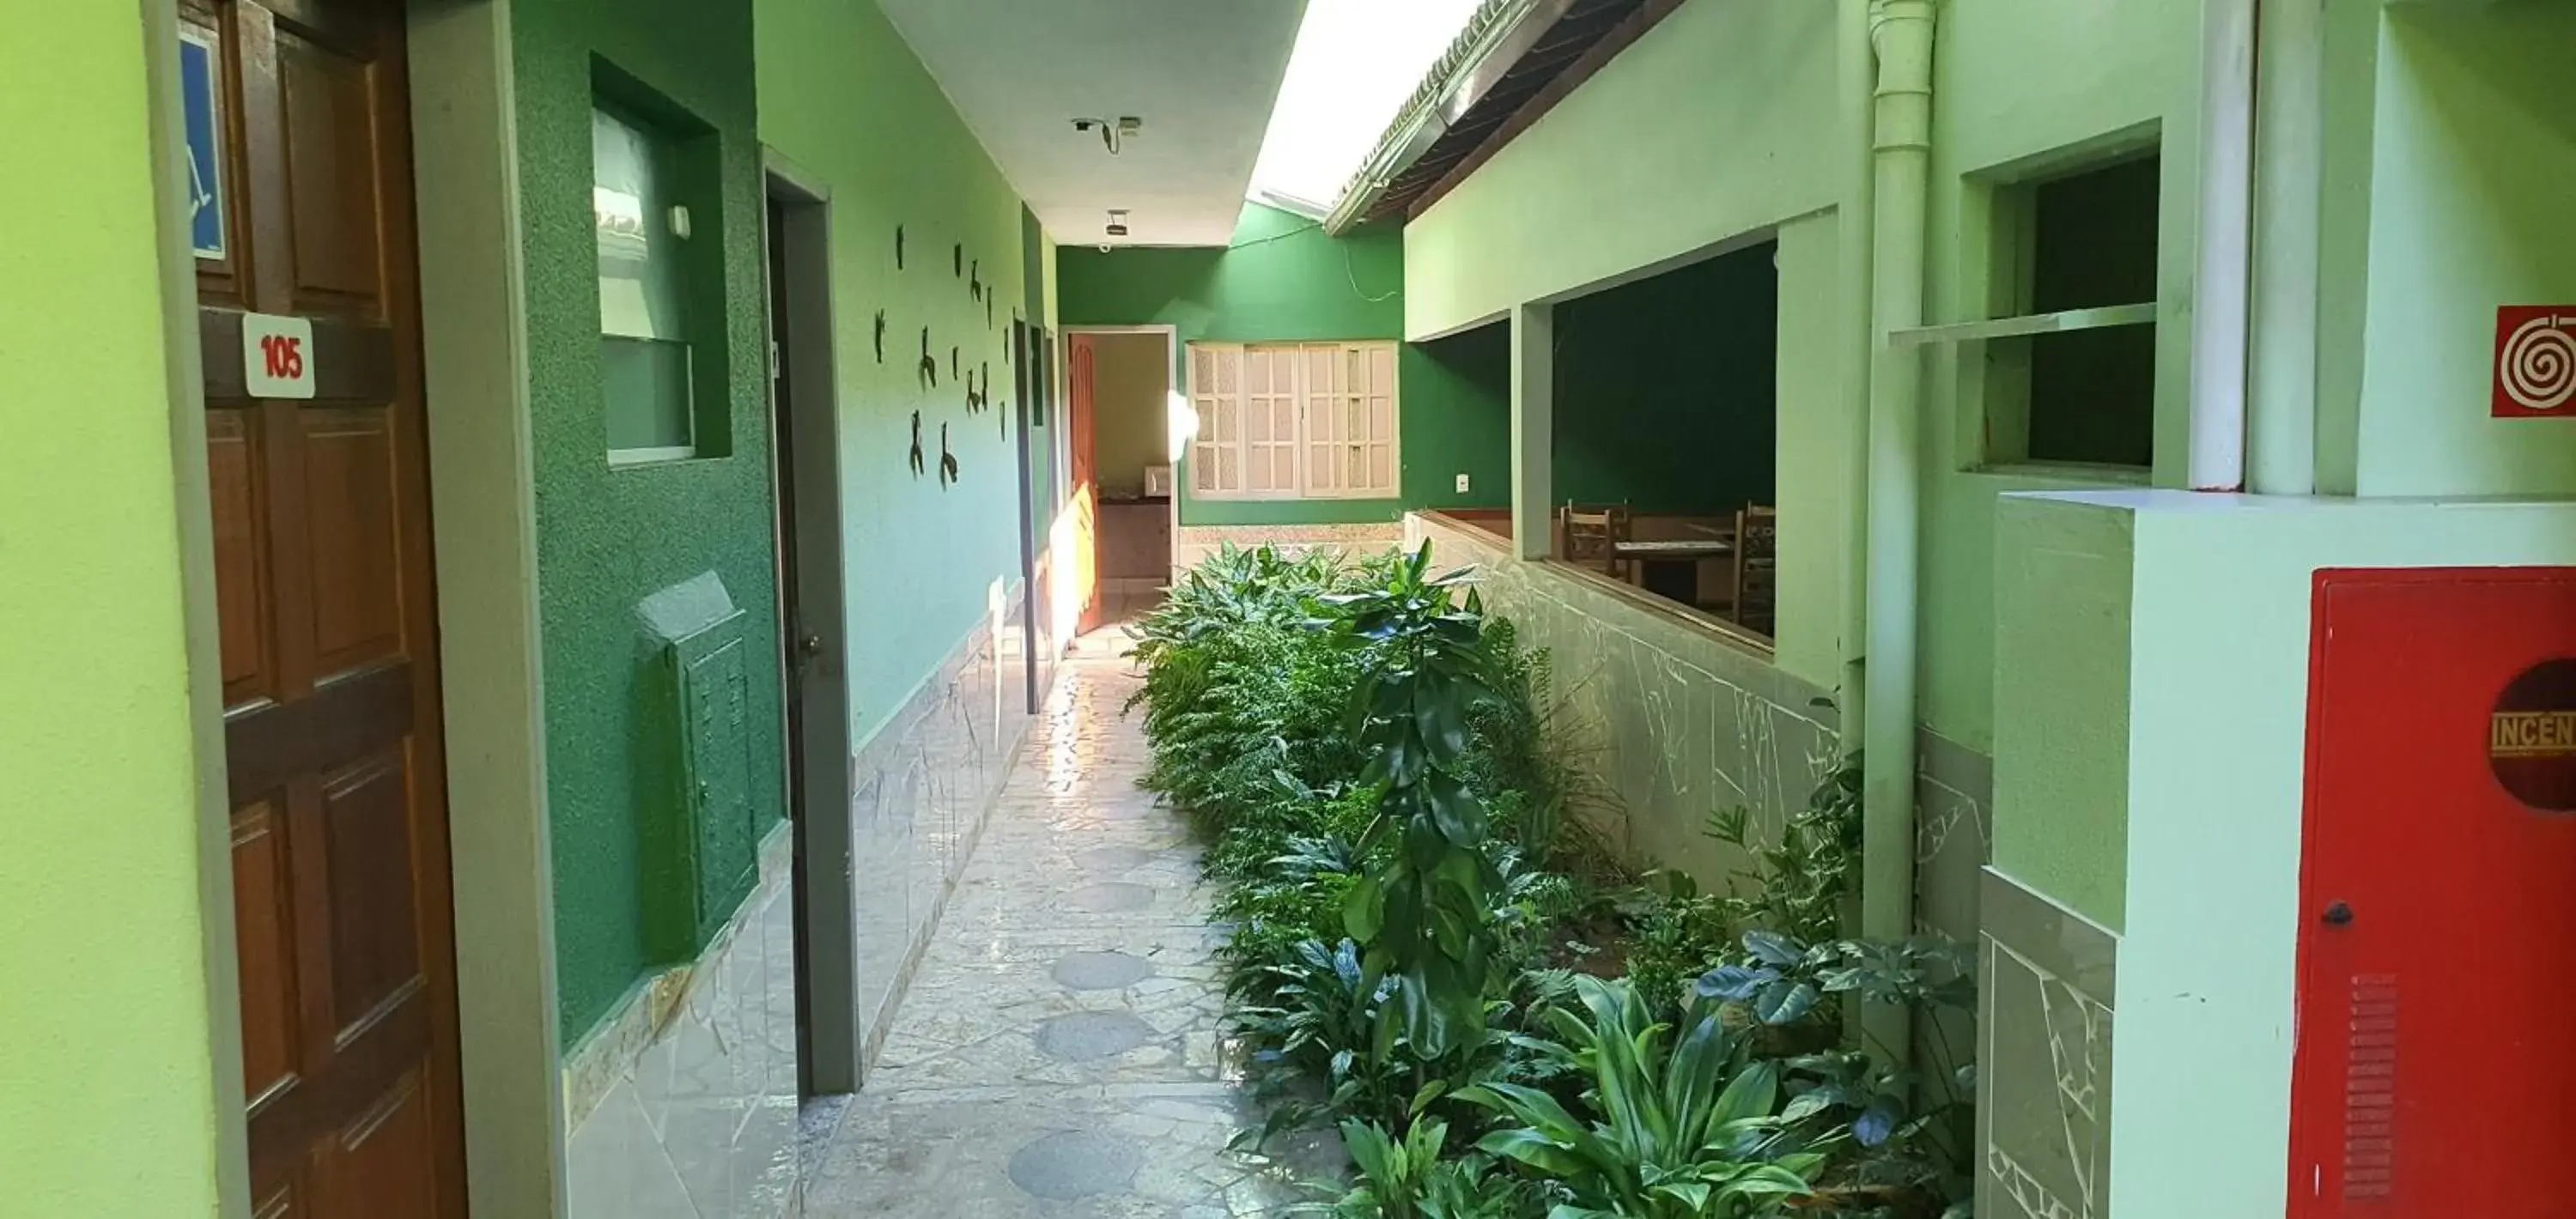 Area and facilities in Duas Praias Hotel Pousada